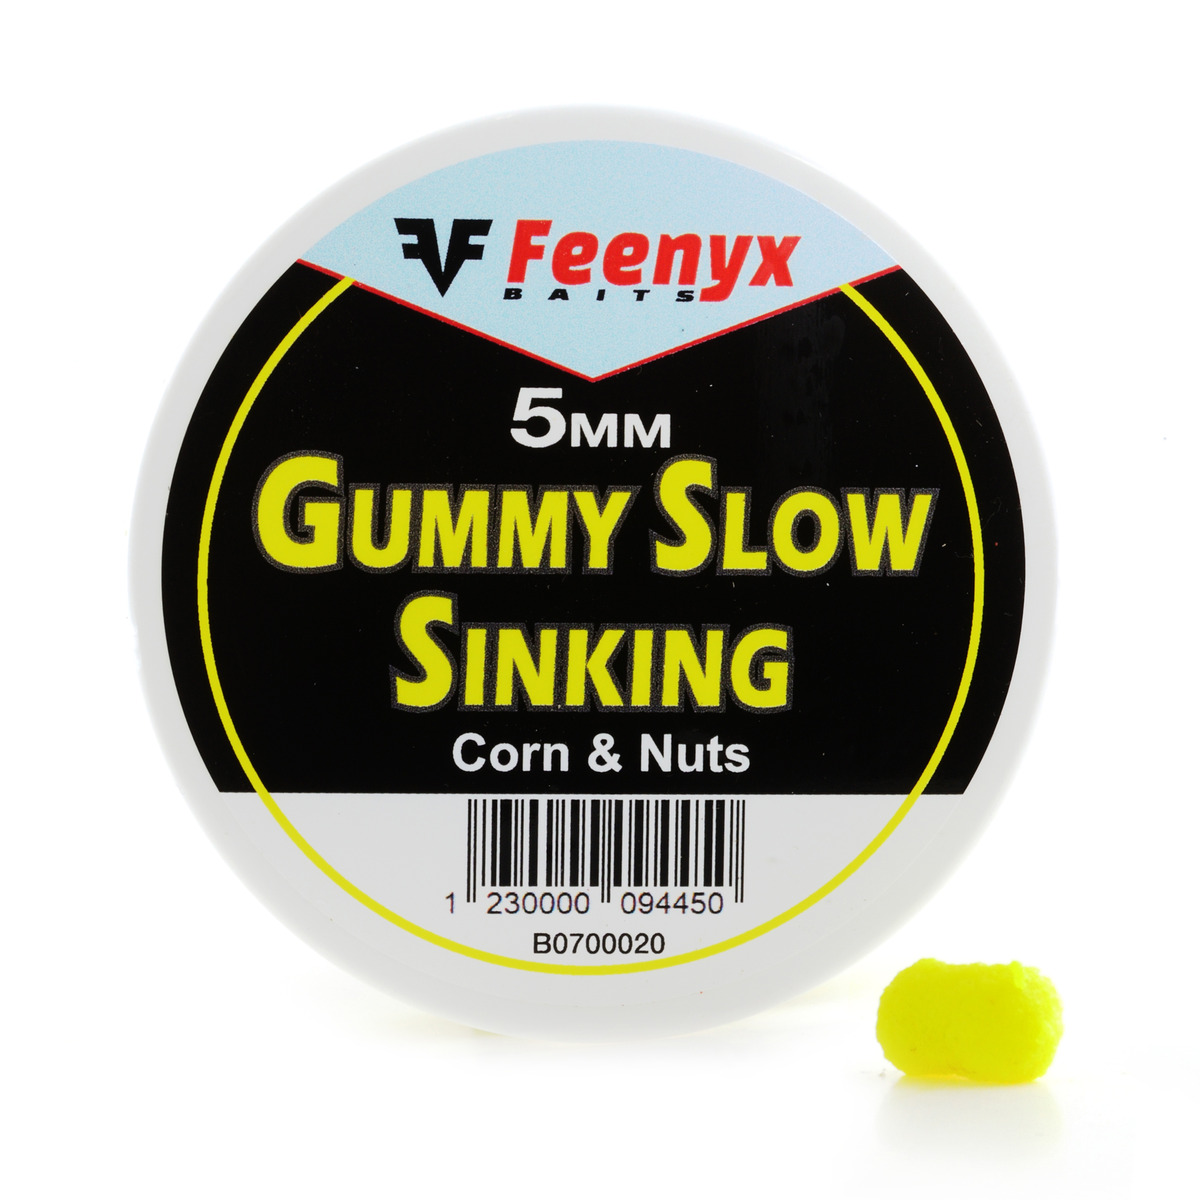 Feenyx Gummy Slow Sinking Corn & Nuts - 5 mm